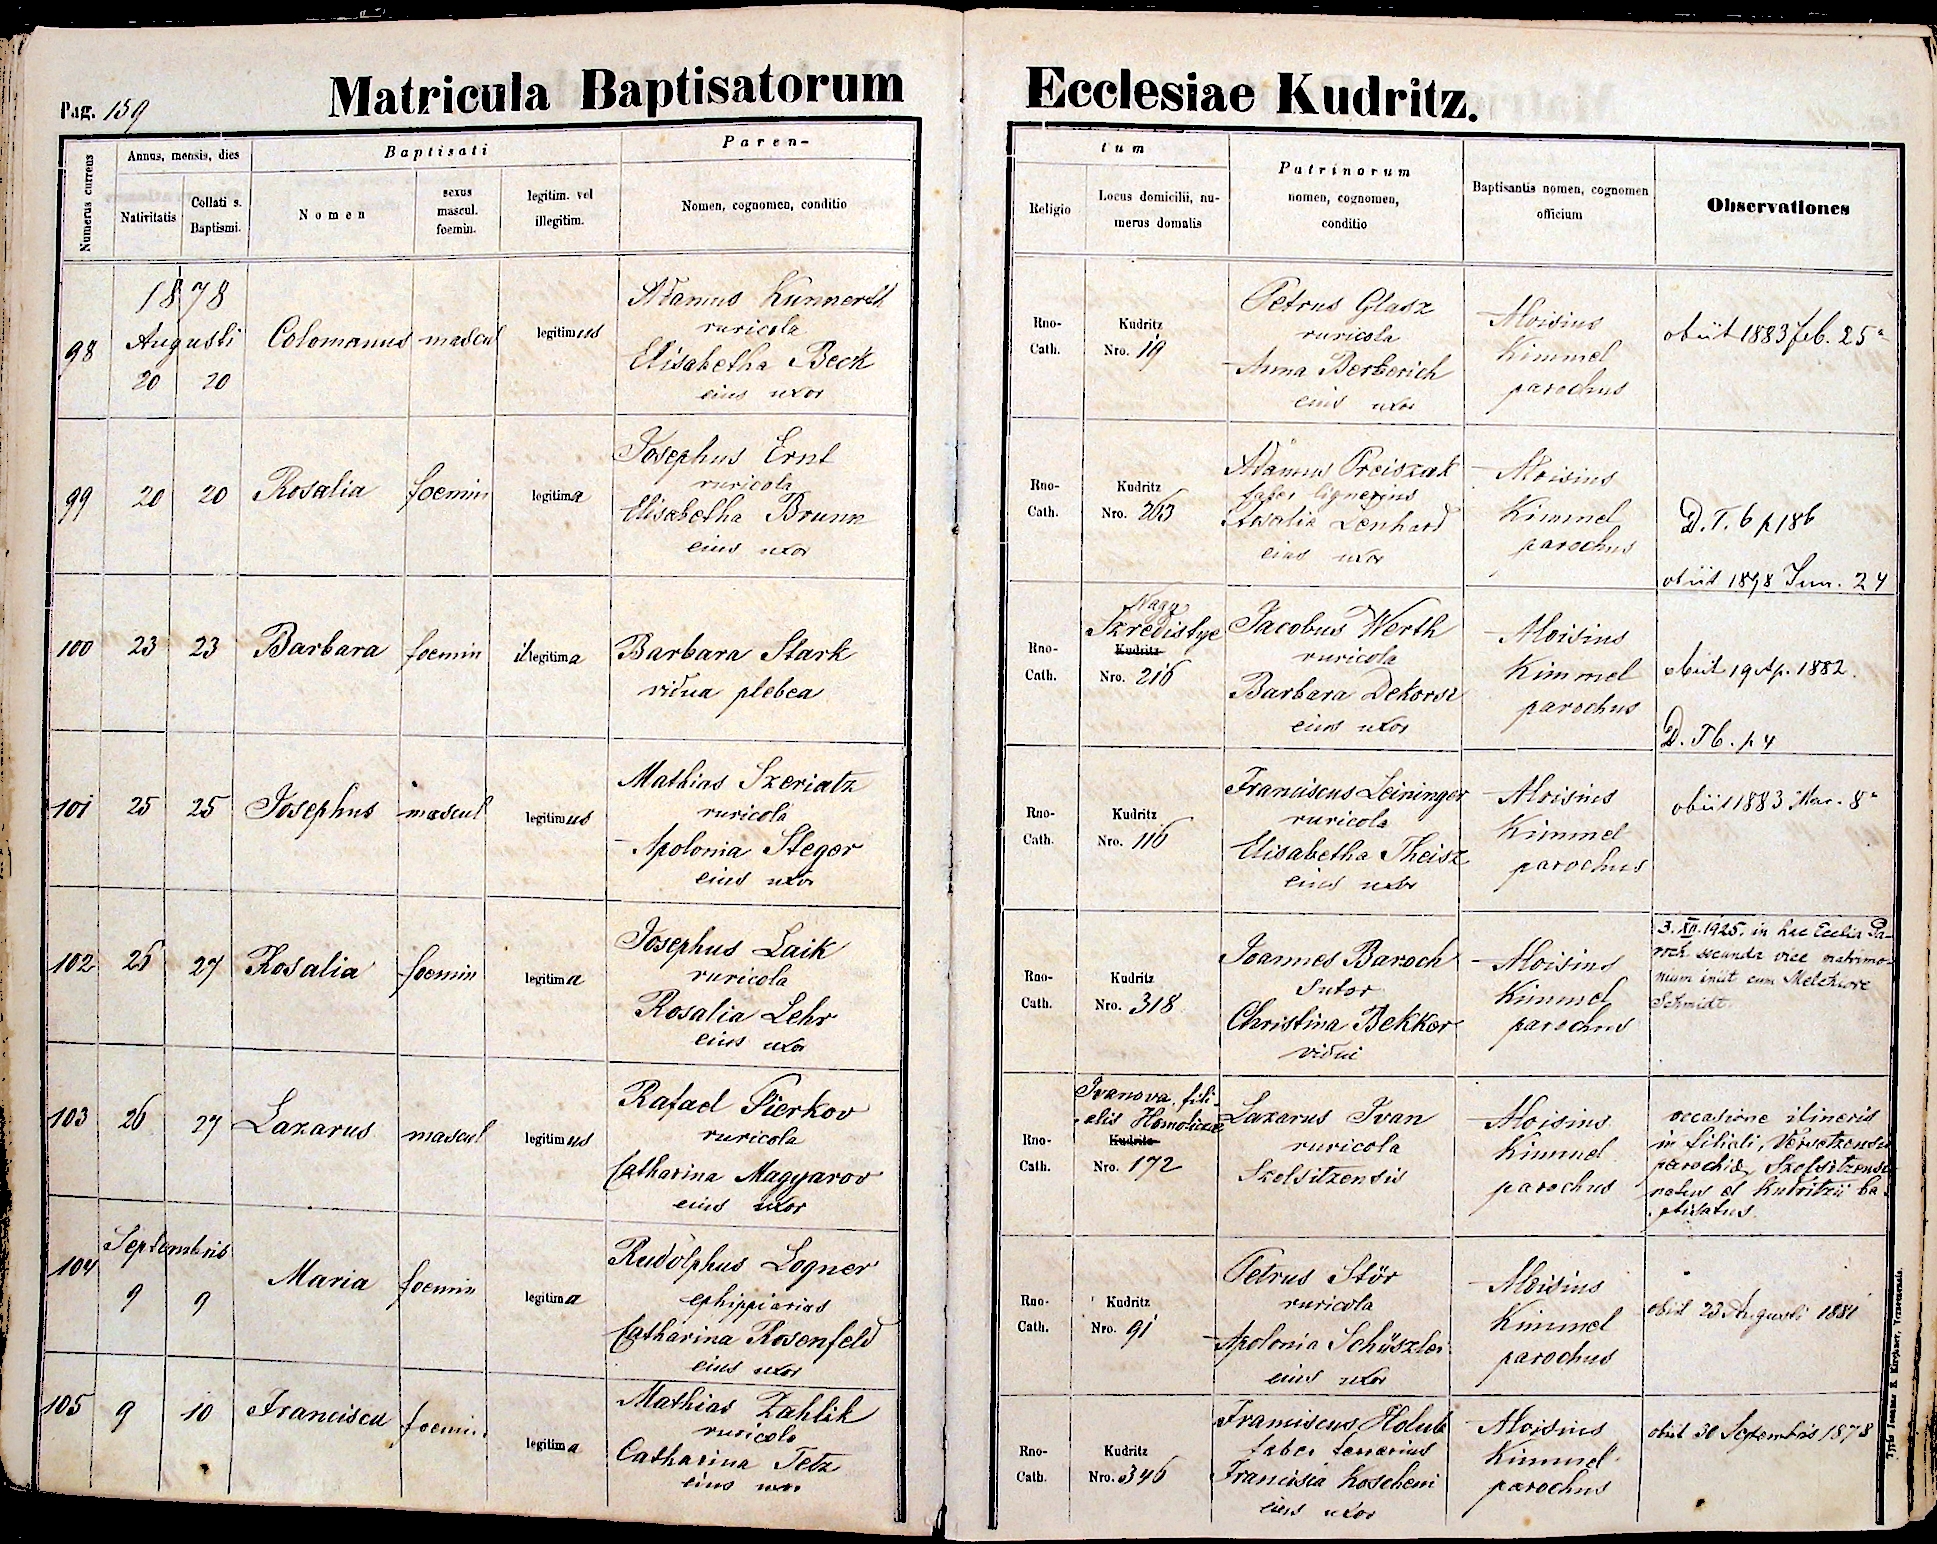 images/church_records/BIRTHS/1884-1899B/1894/159